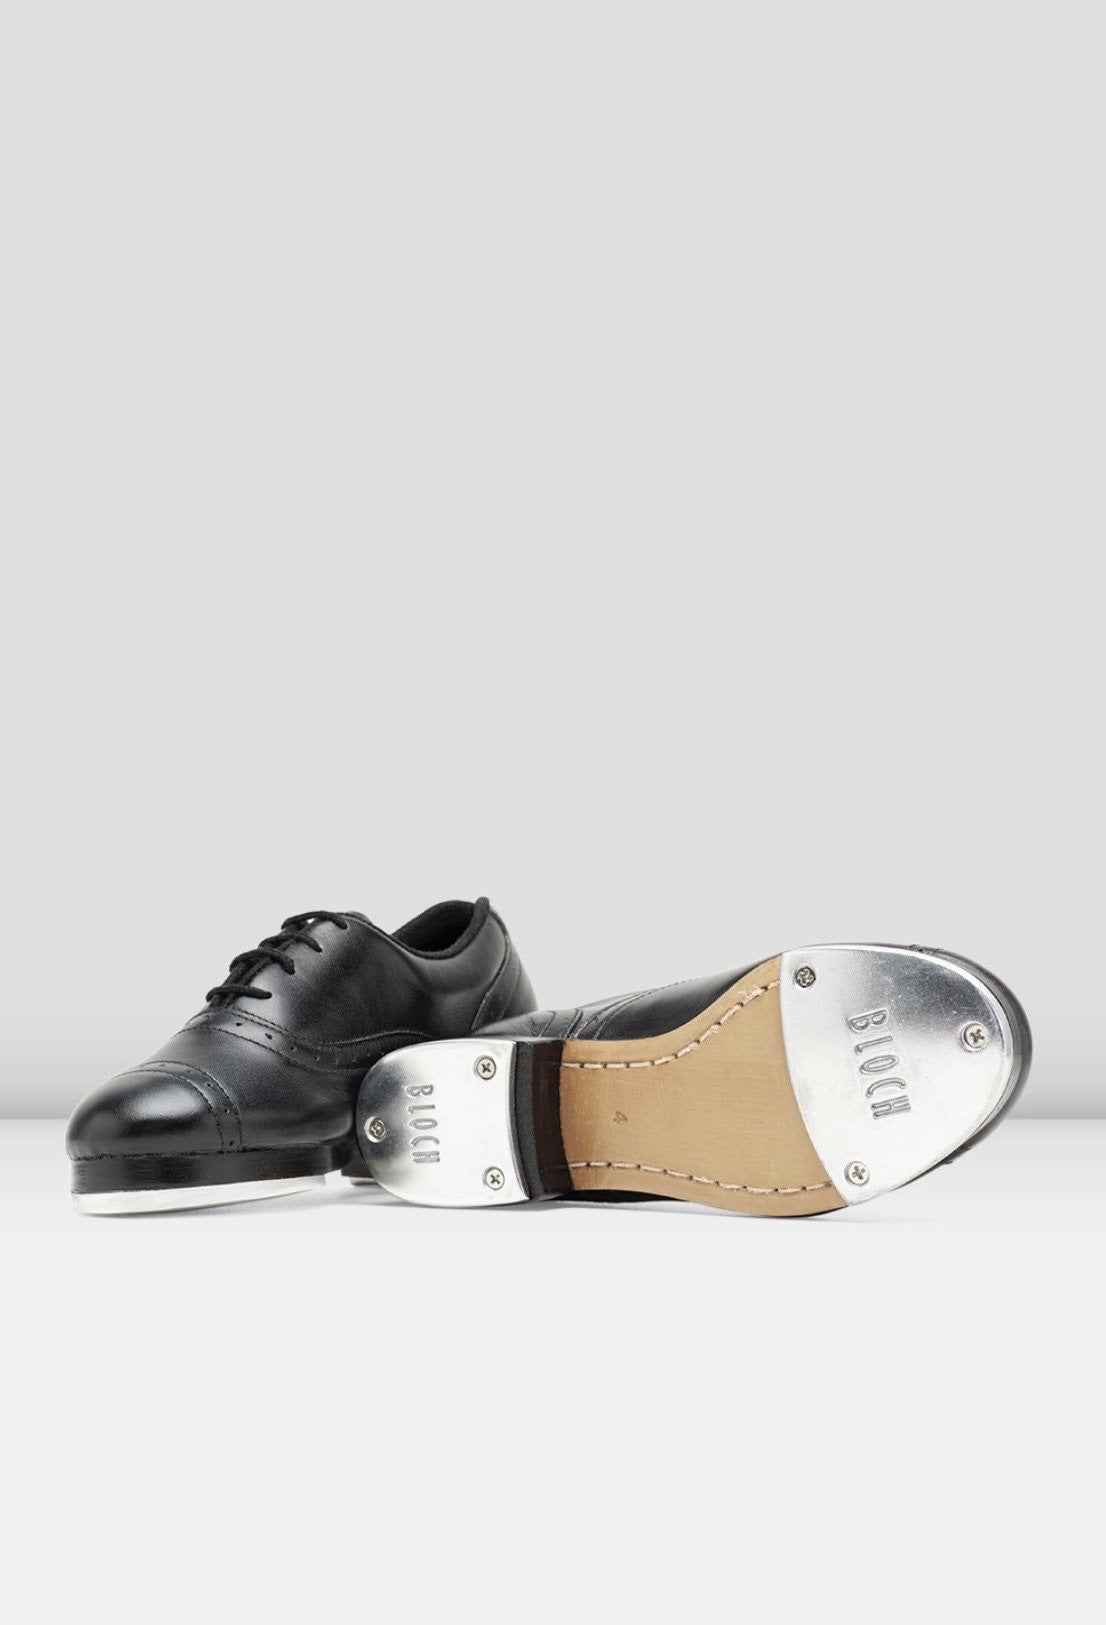 Bloch Jason Samuels Smith Tap Shoes - Adult